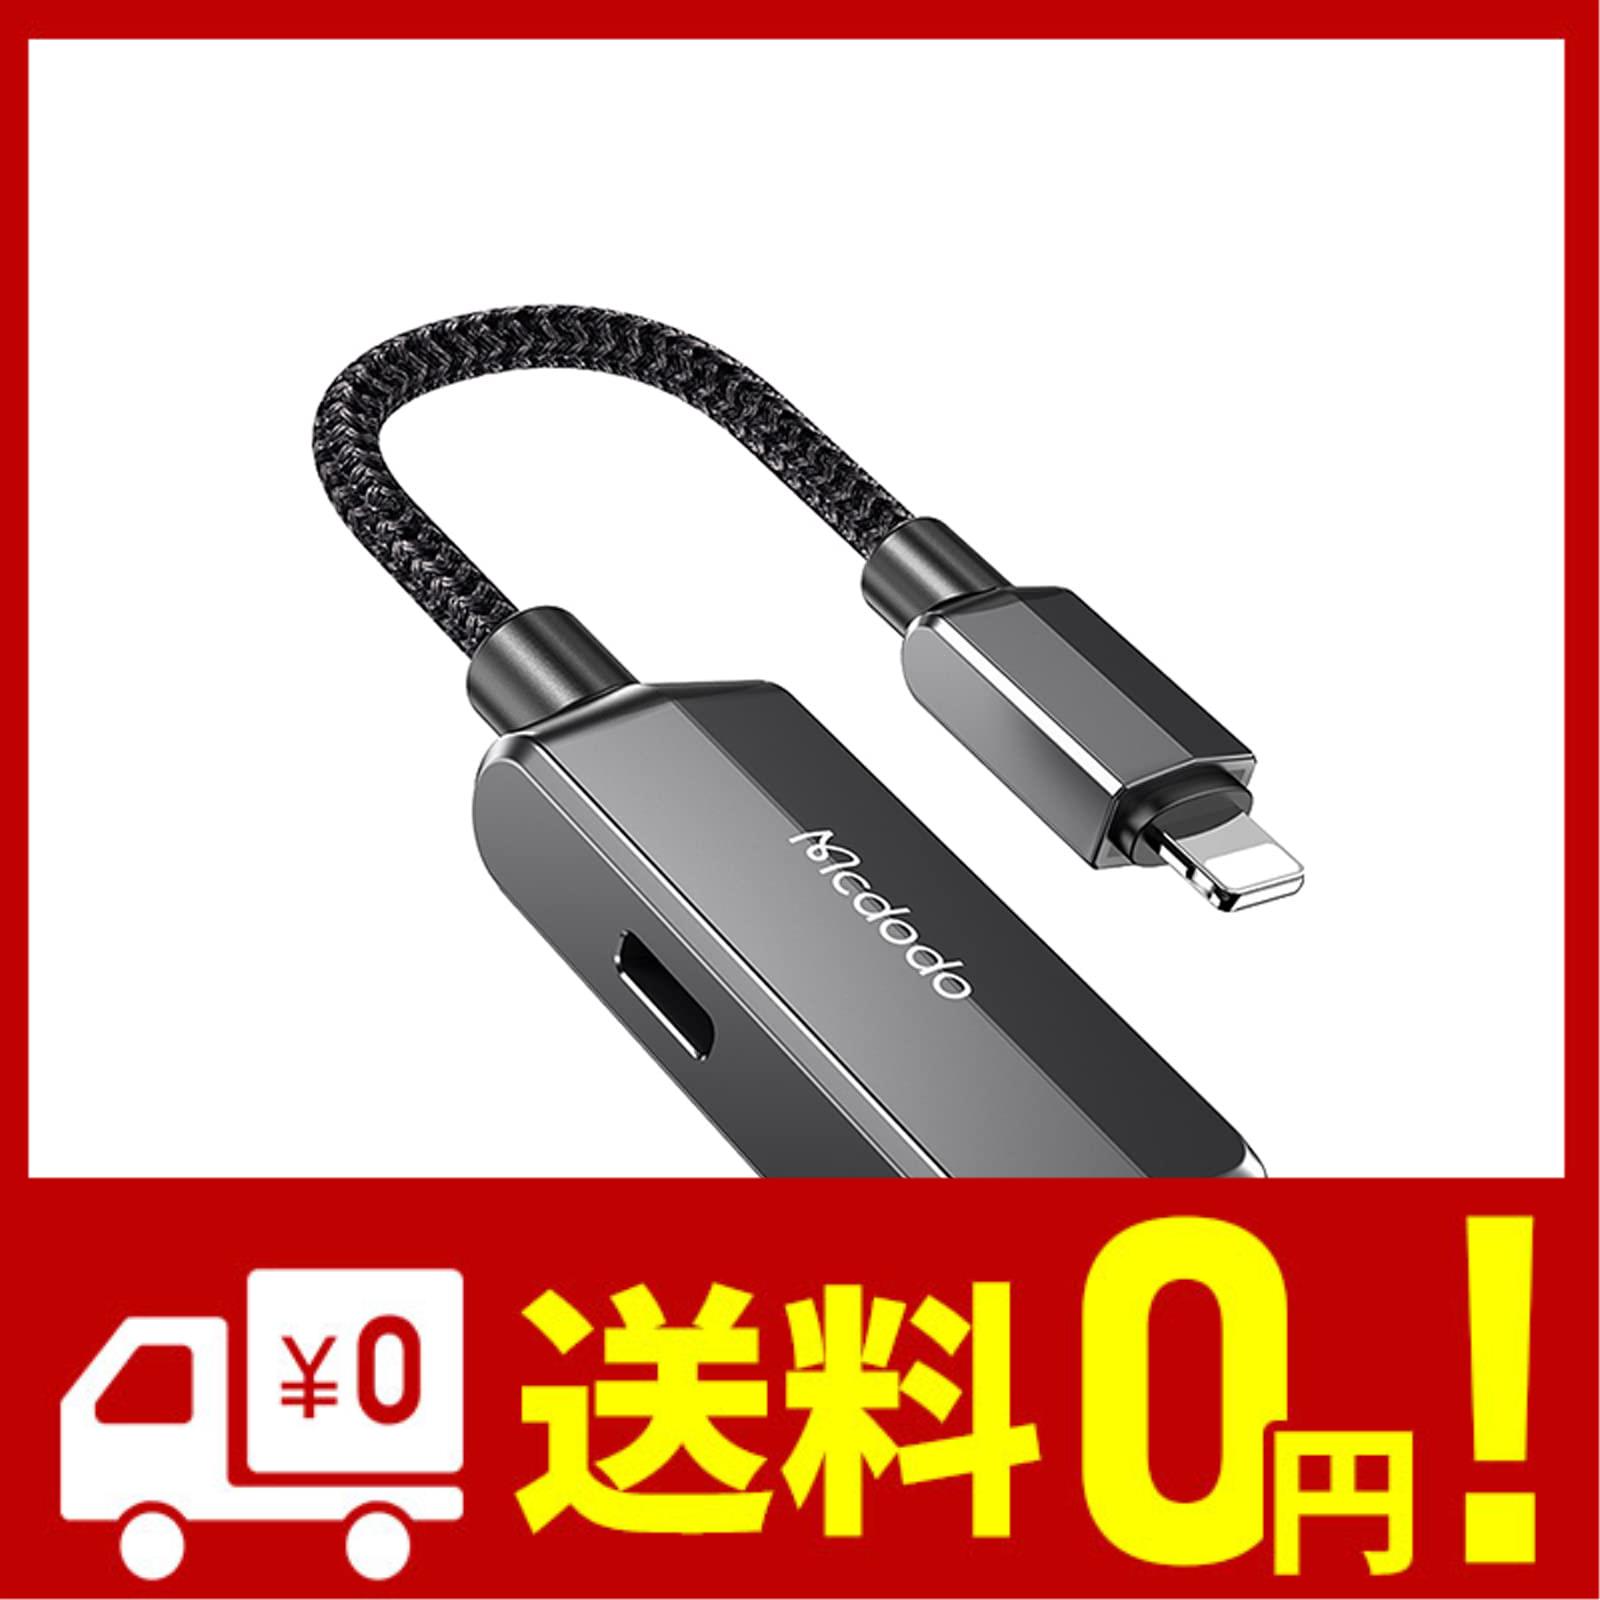 Mcdodo 2in1 ライトニング変換アダプタ i-Phone USB 変換アダプタ 2ポート搭載 USB-A 3.0 ライトニング 2.4A急速充電 スマートチップ搭載